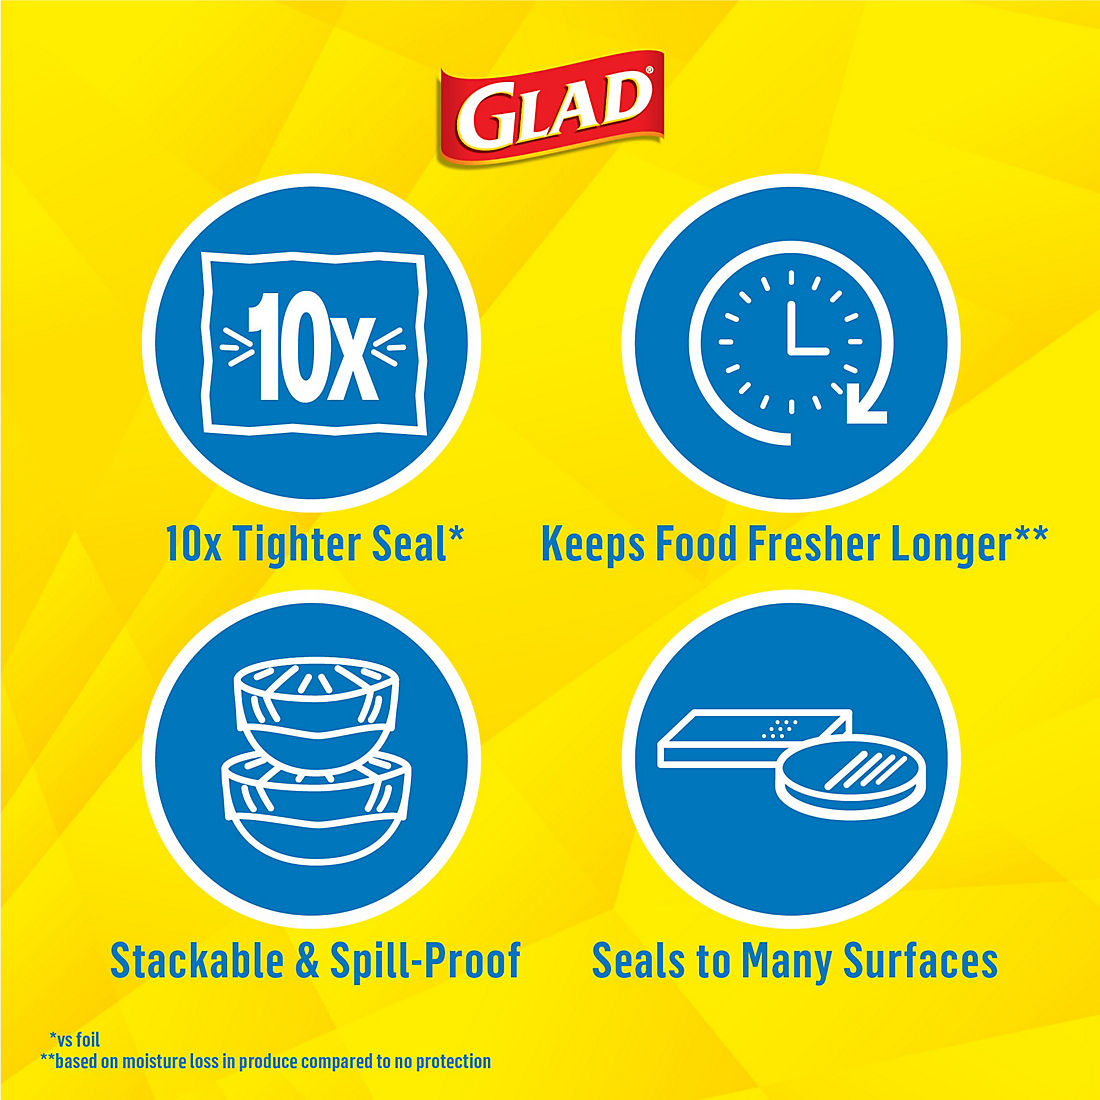 Glad Press'n Seal Food Plastic Wrap 280 Sq. ft. 2 Pk.